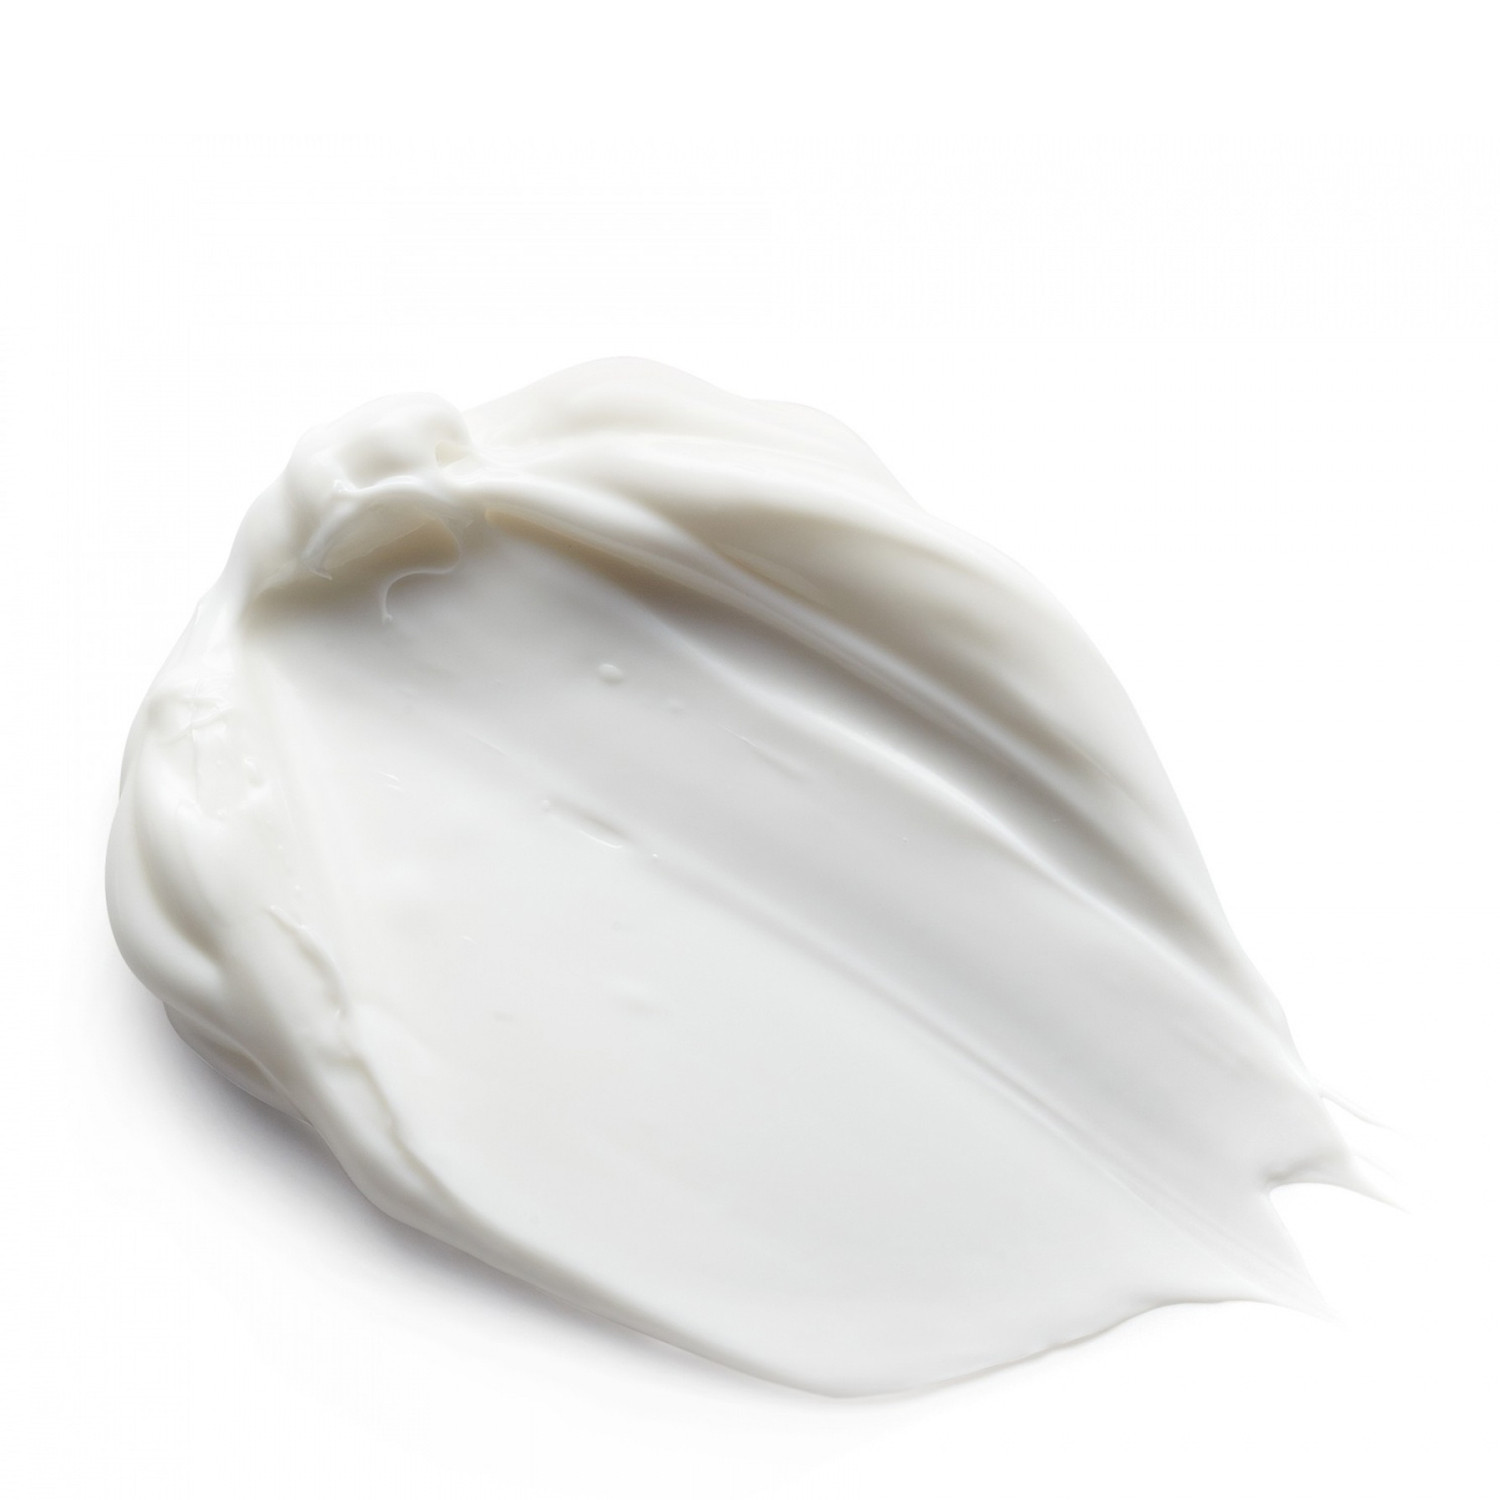 Крем для вмивання Elemis Pro-Radiance Cream Cleanser